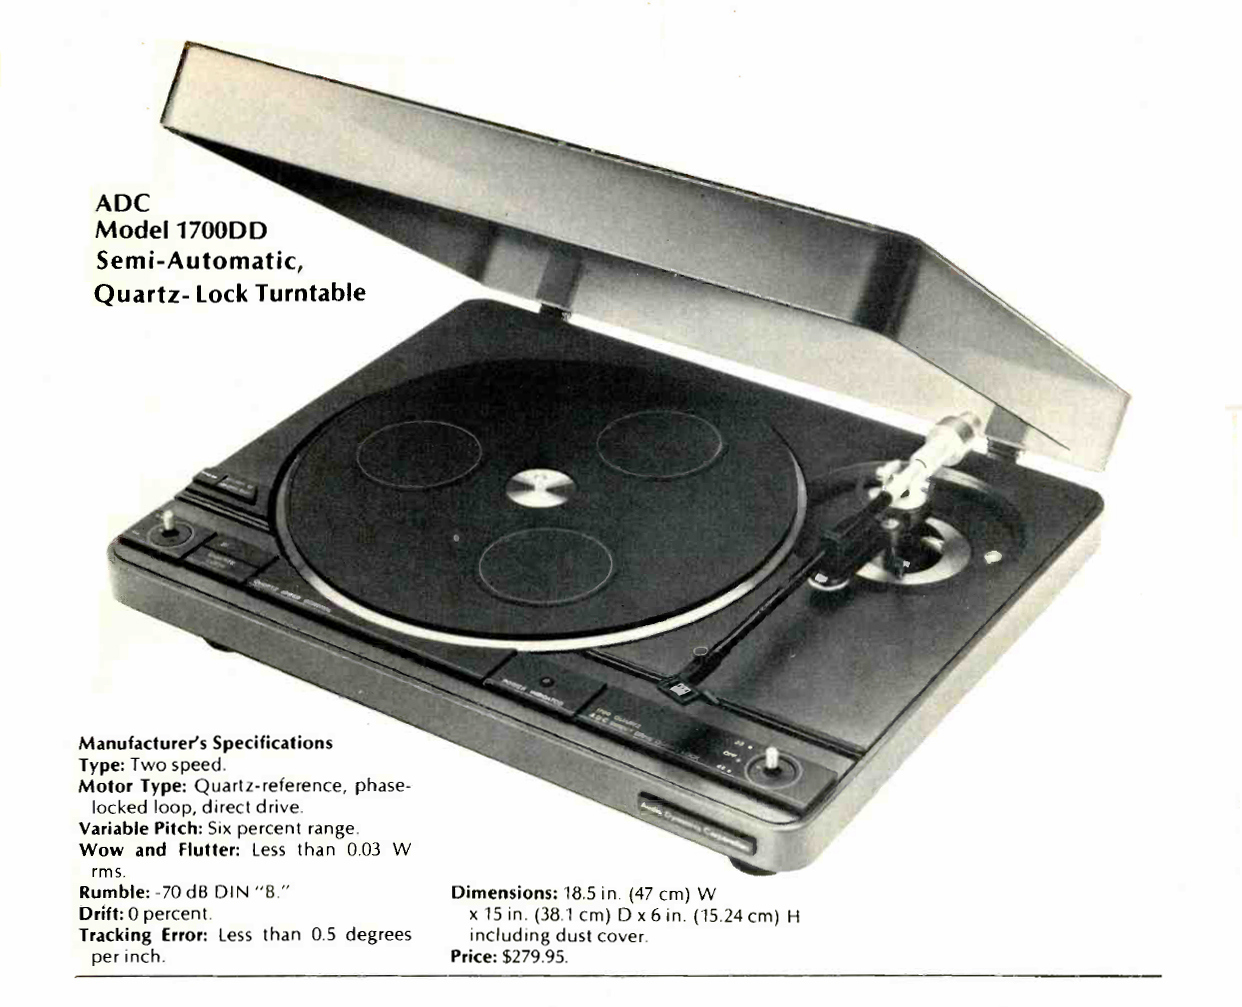 ADC 1700 DD-Daten-1978.jpg